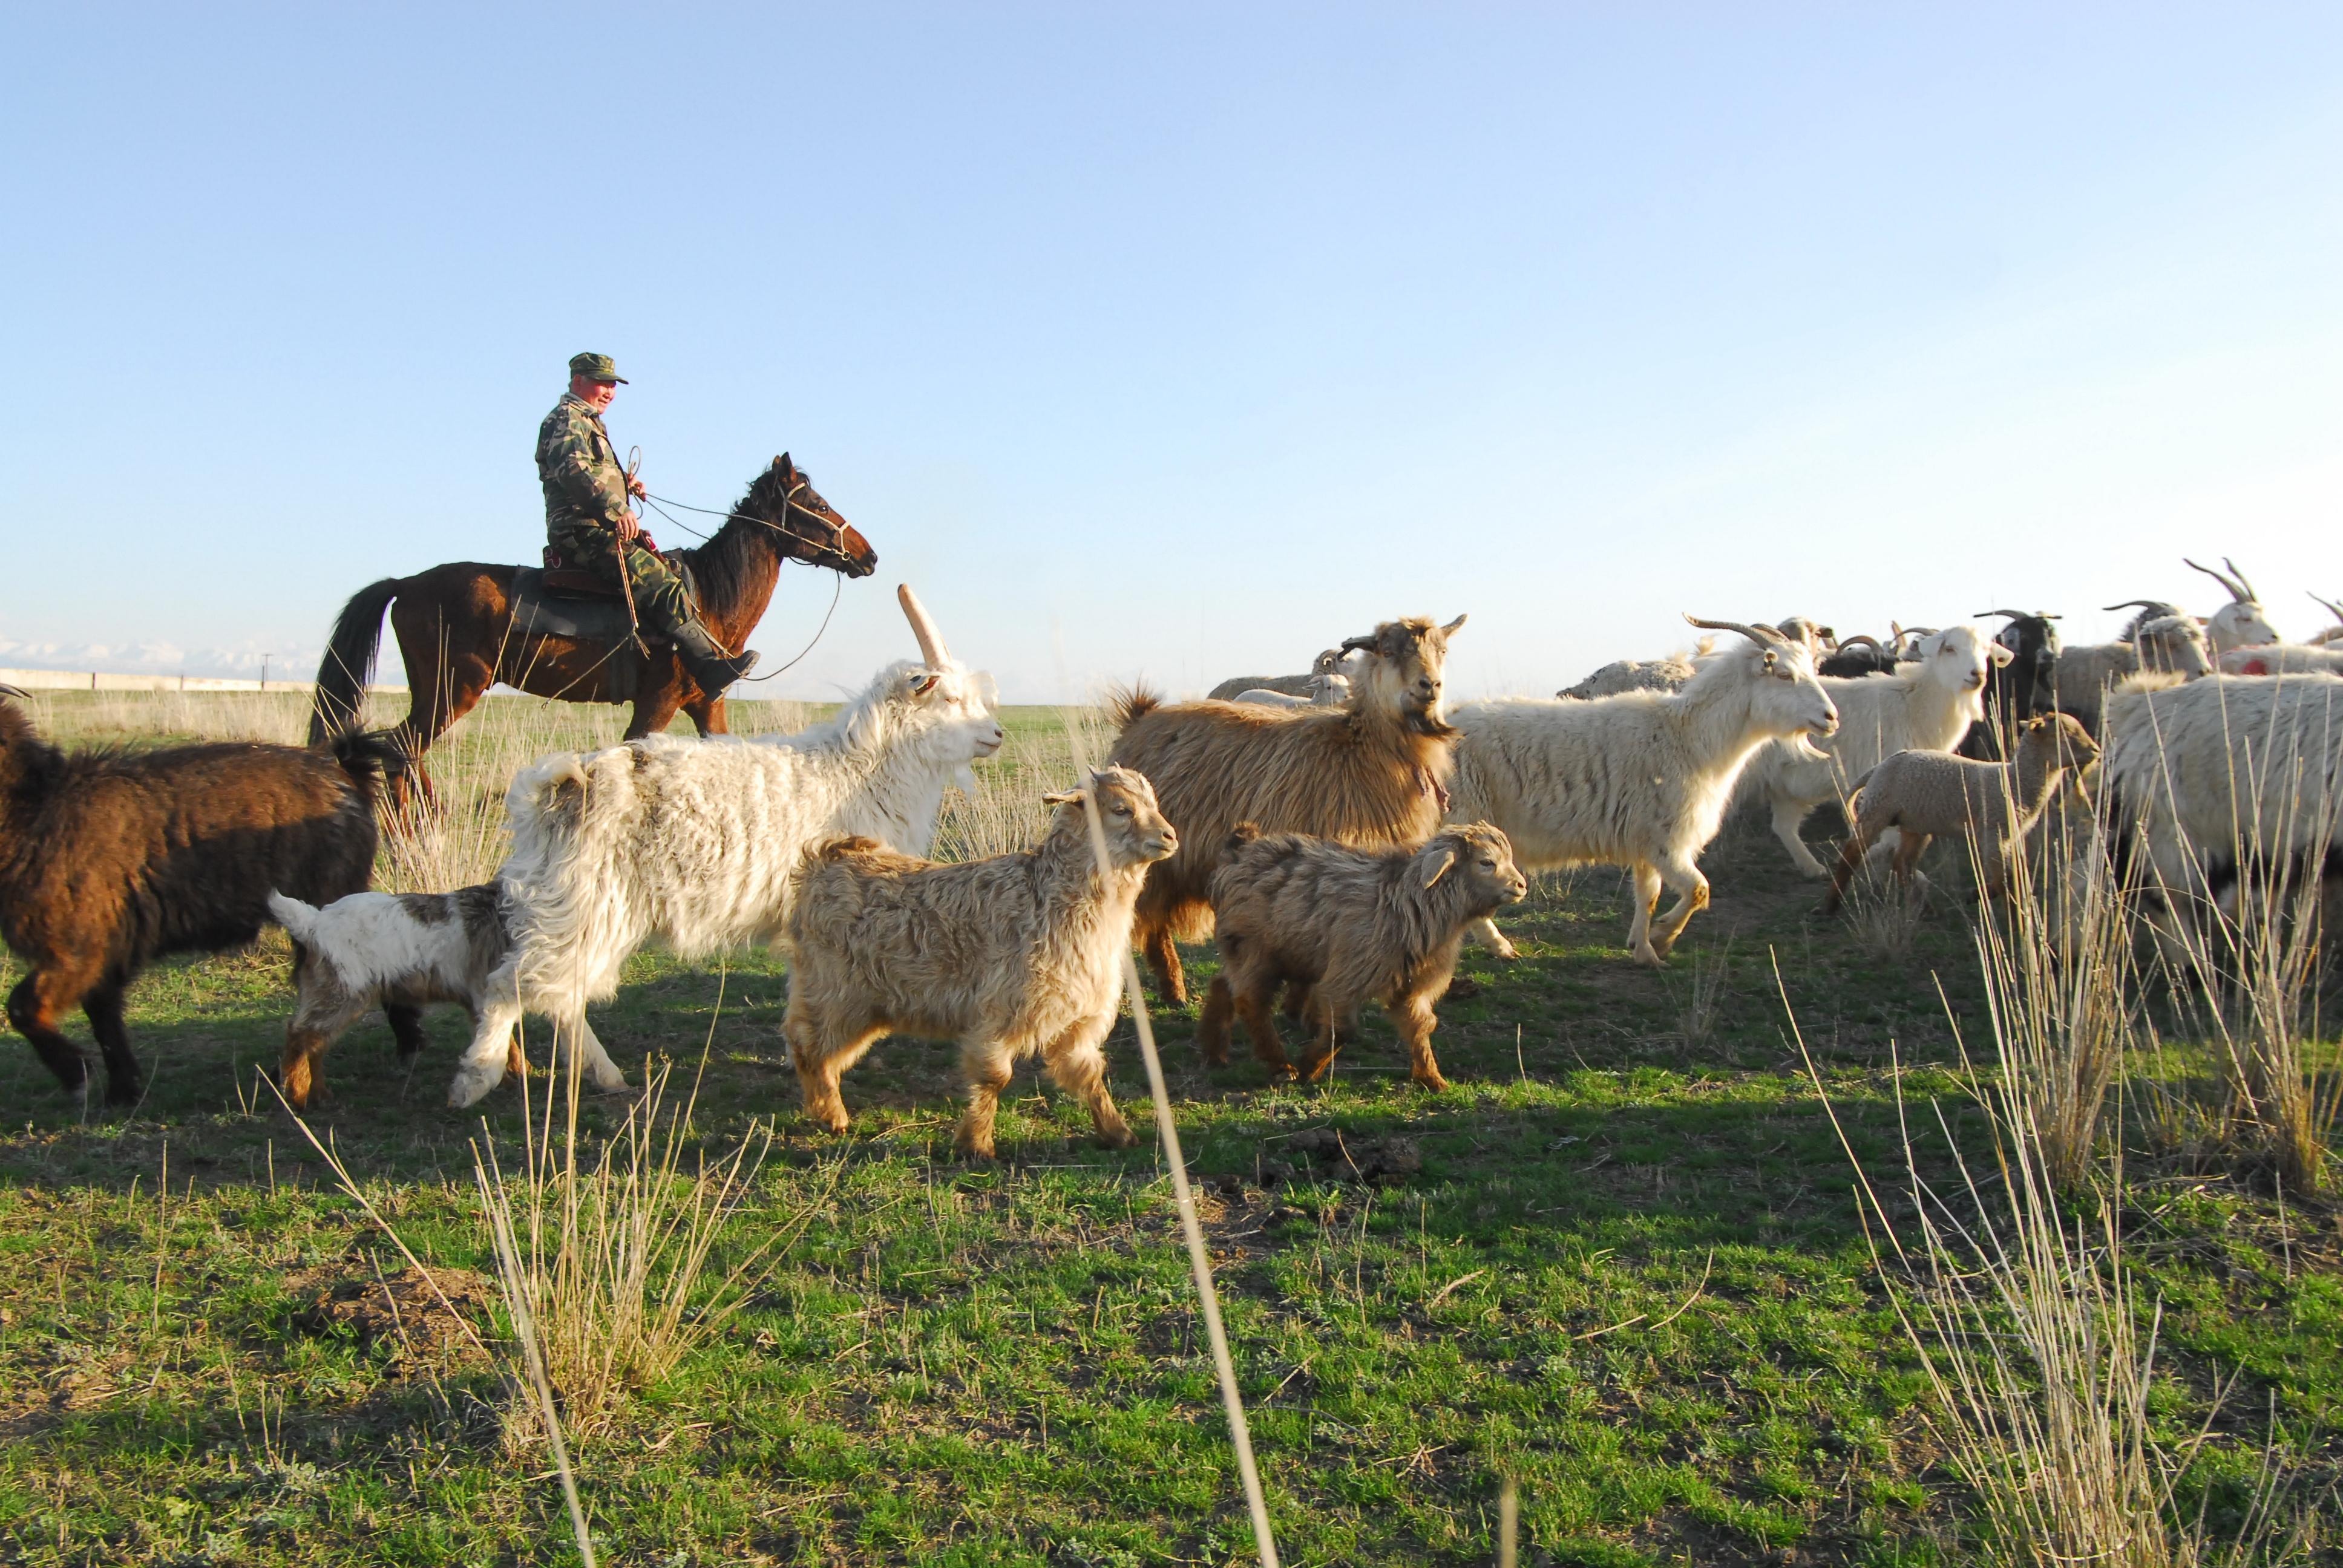 Herding livestock with local family © Vladimir Tretyakov / Shutterstock